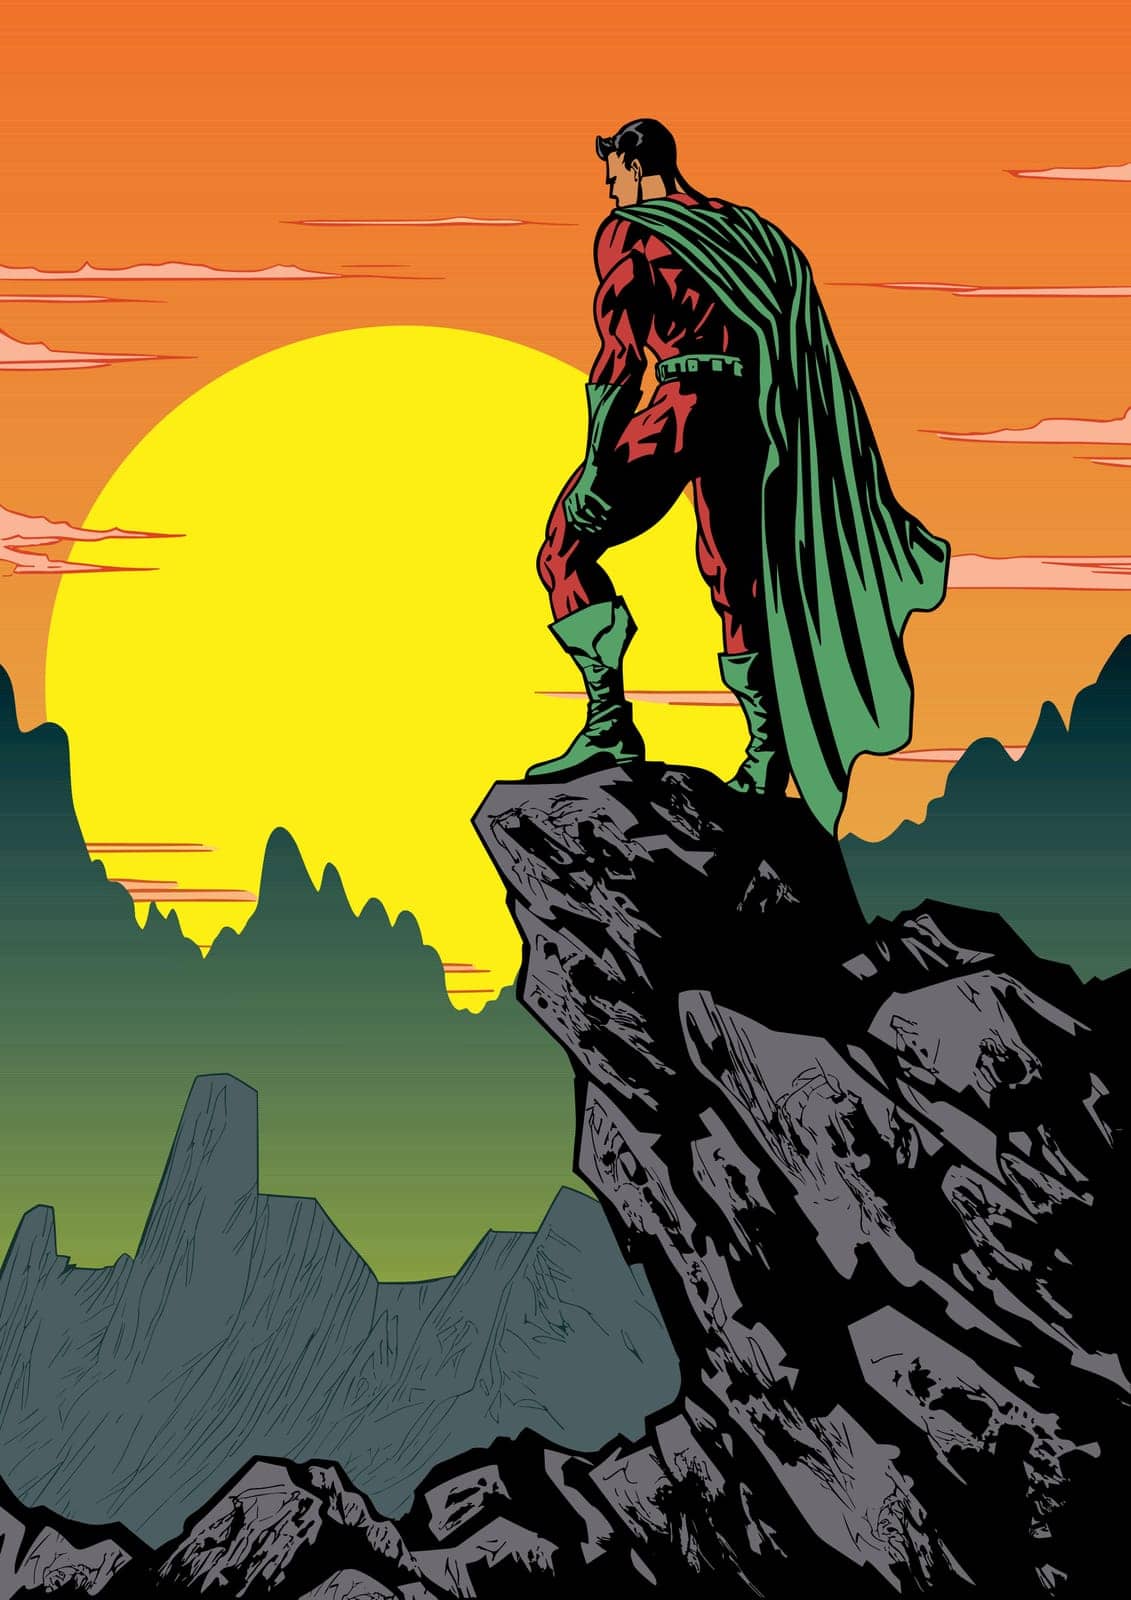 Superhero on Edge of Cliff by Malchev